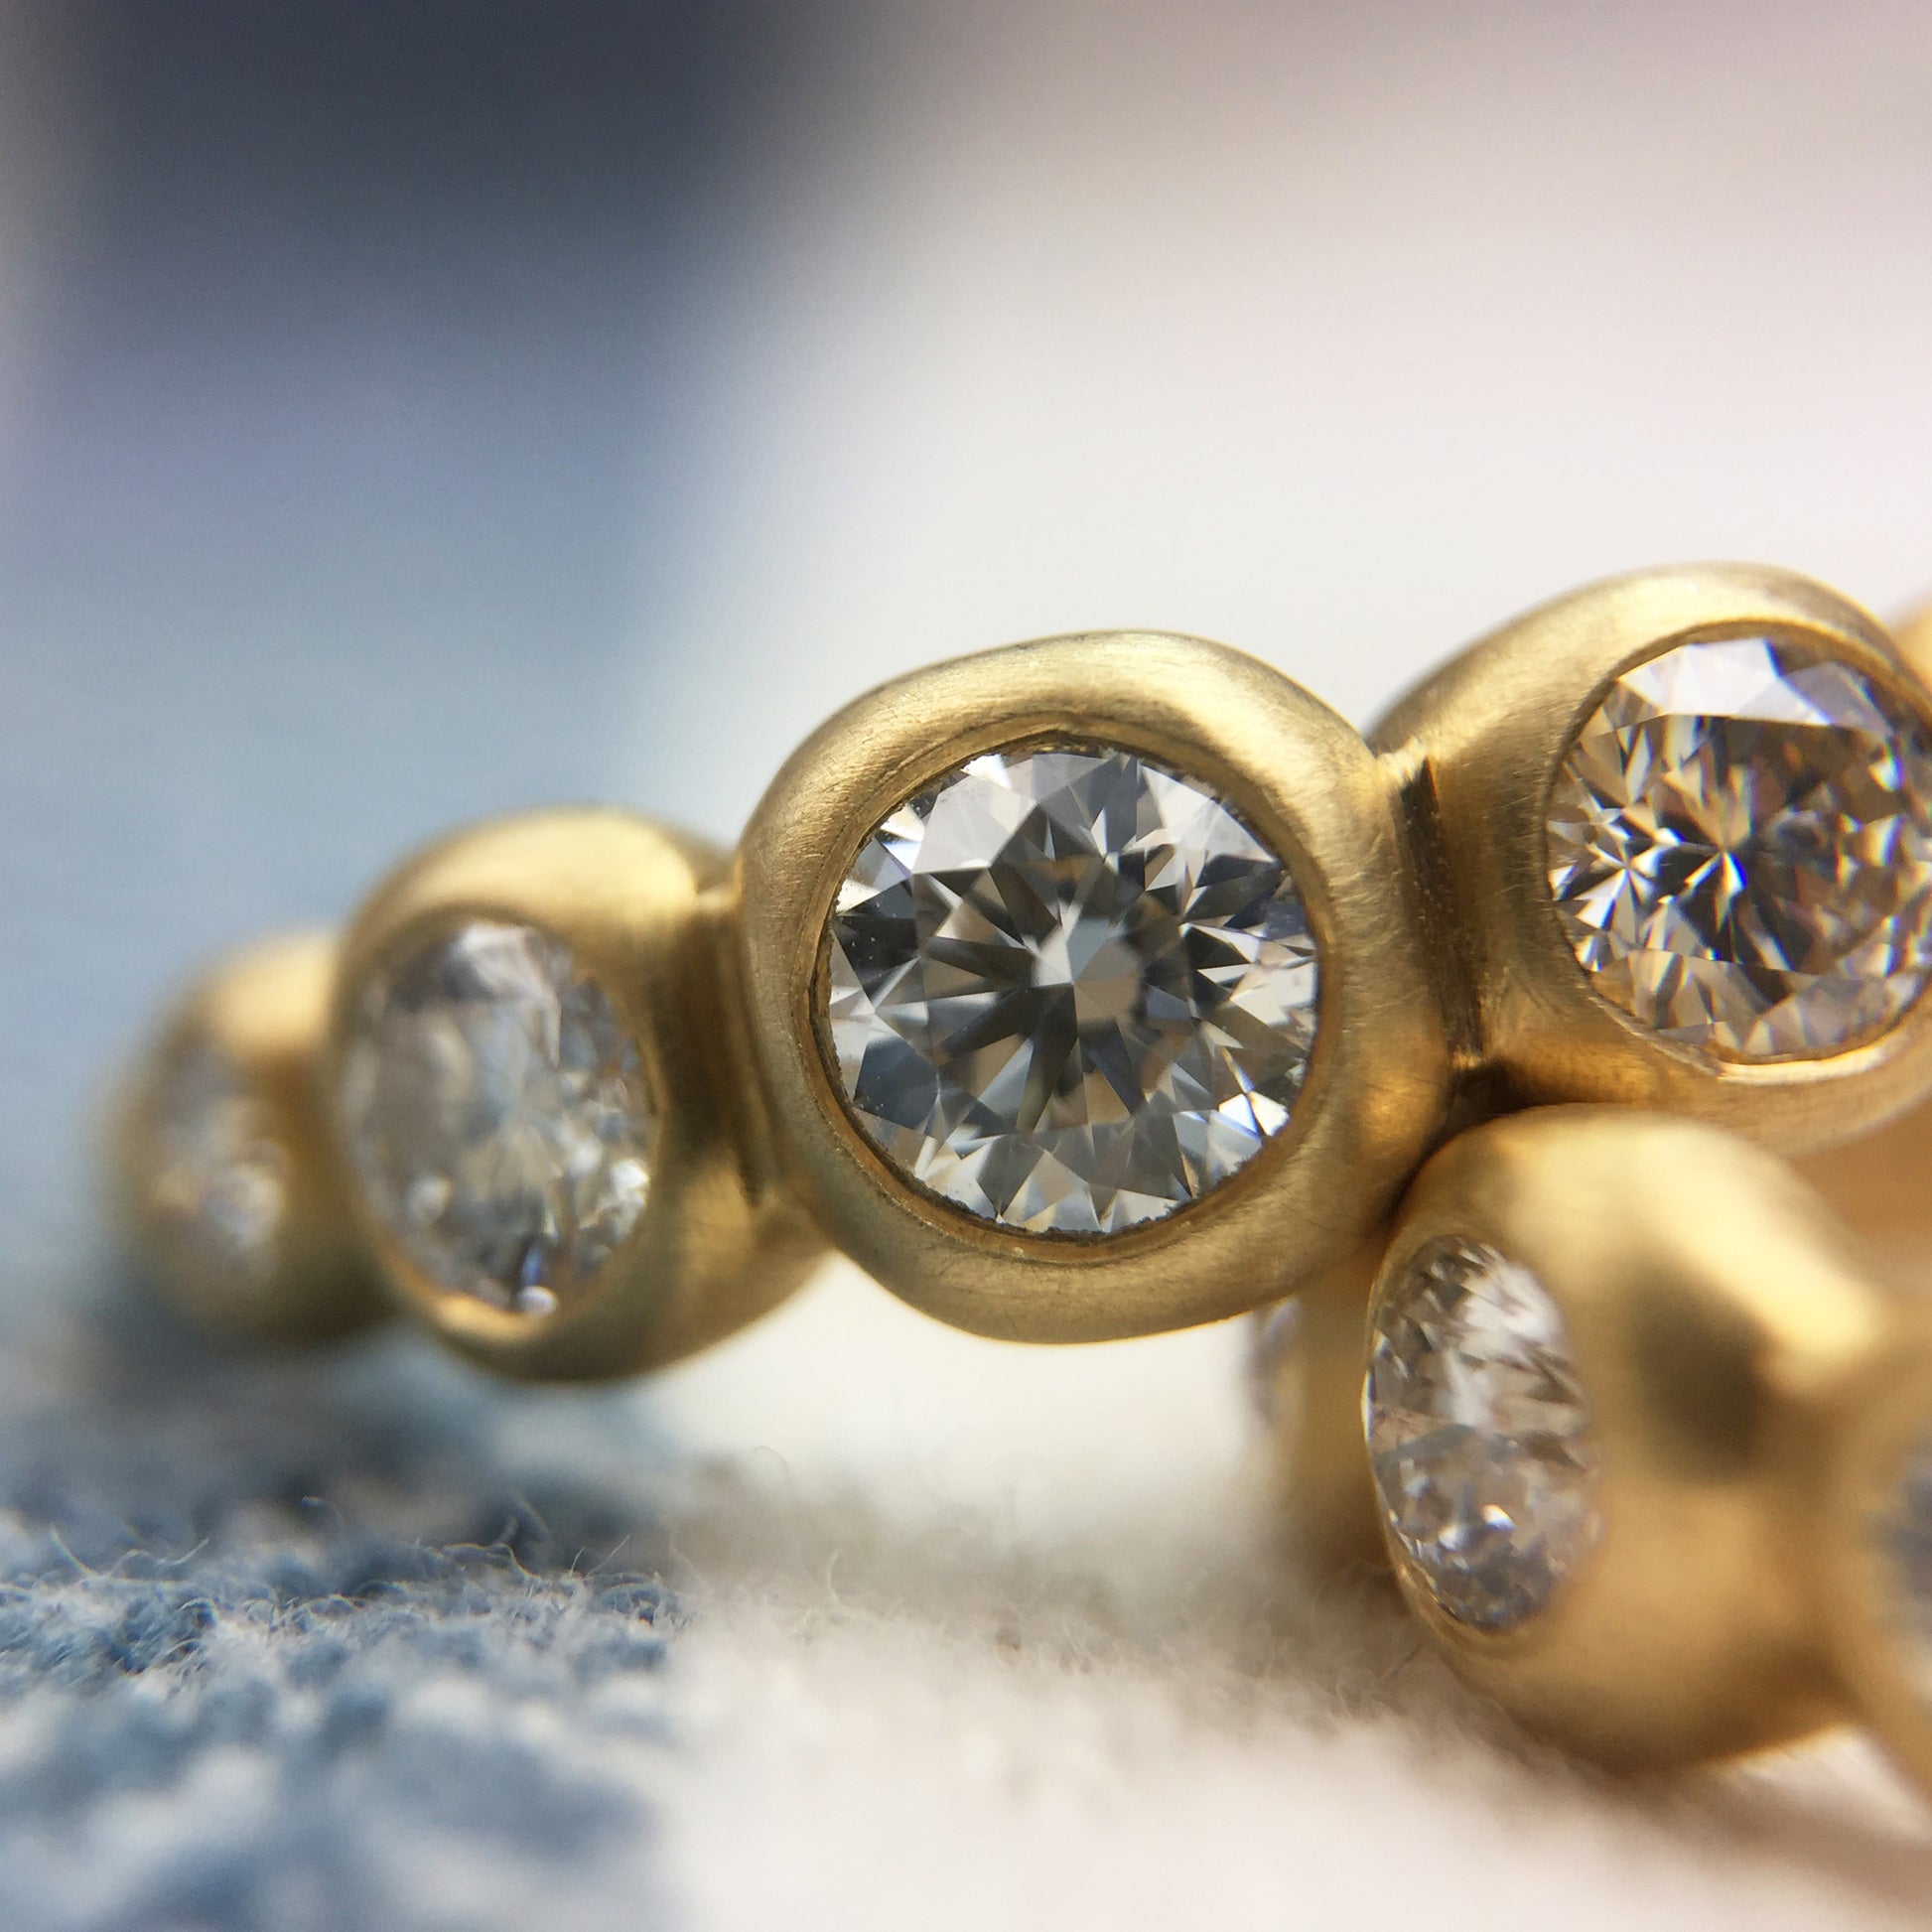 Kima Ring with diamonds, 25 point center stone, detail